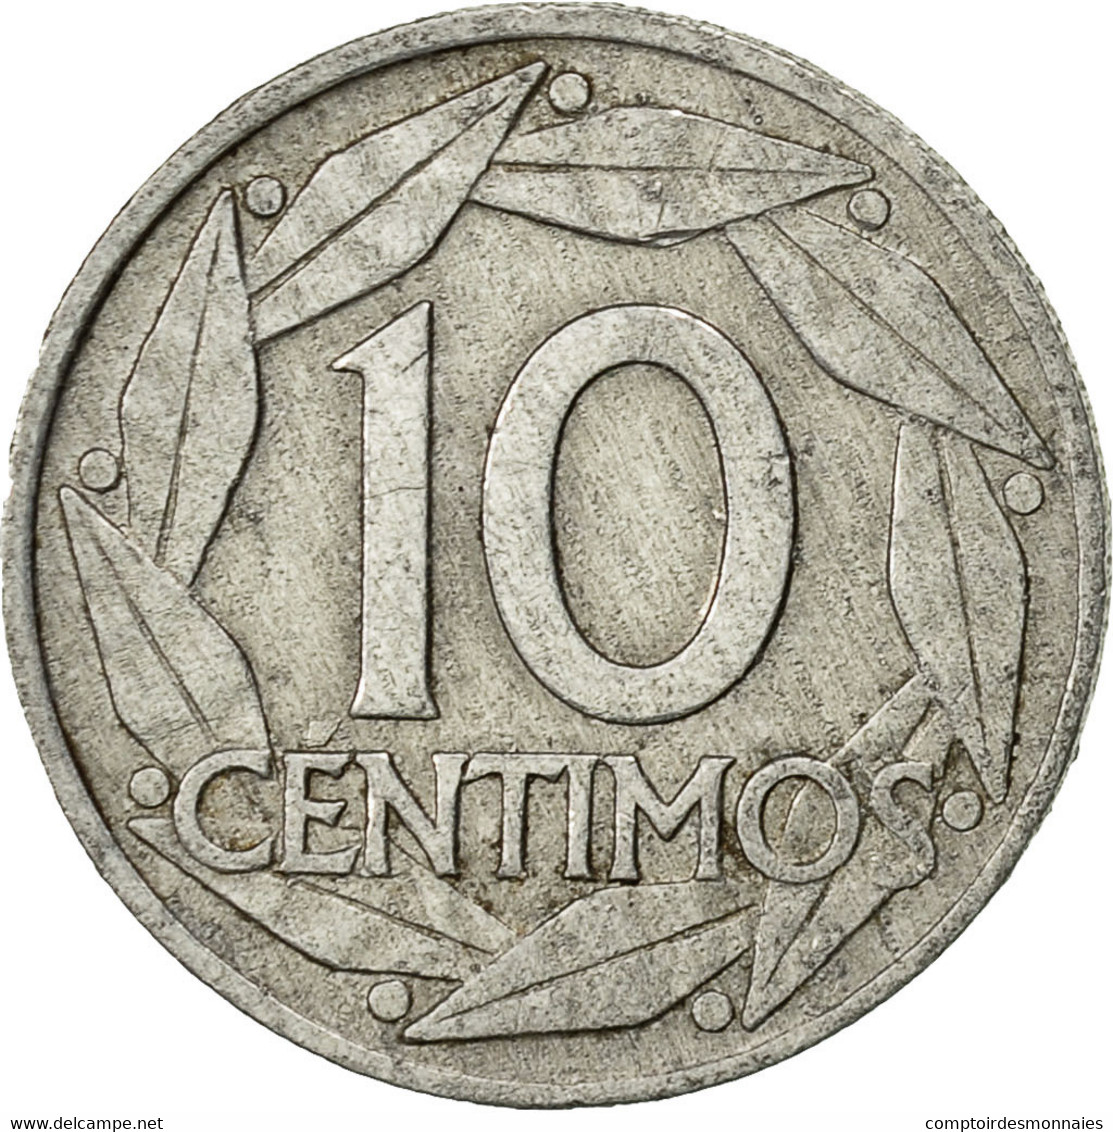 Monnaie, Espagne, Francisco Franco, Caudillo, 10 Centimos, 1959, TTB, Aluminium - 10 Céntimos